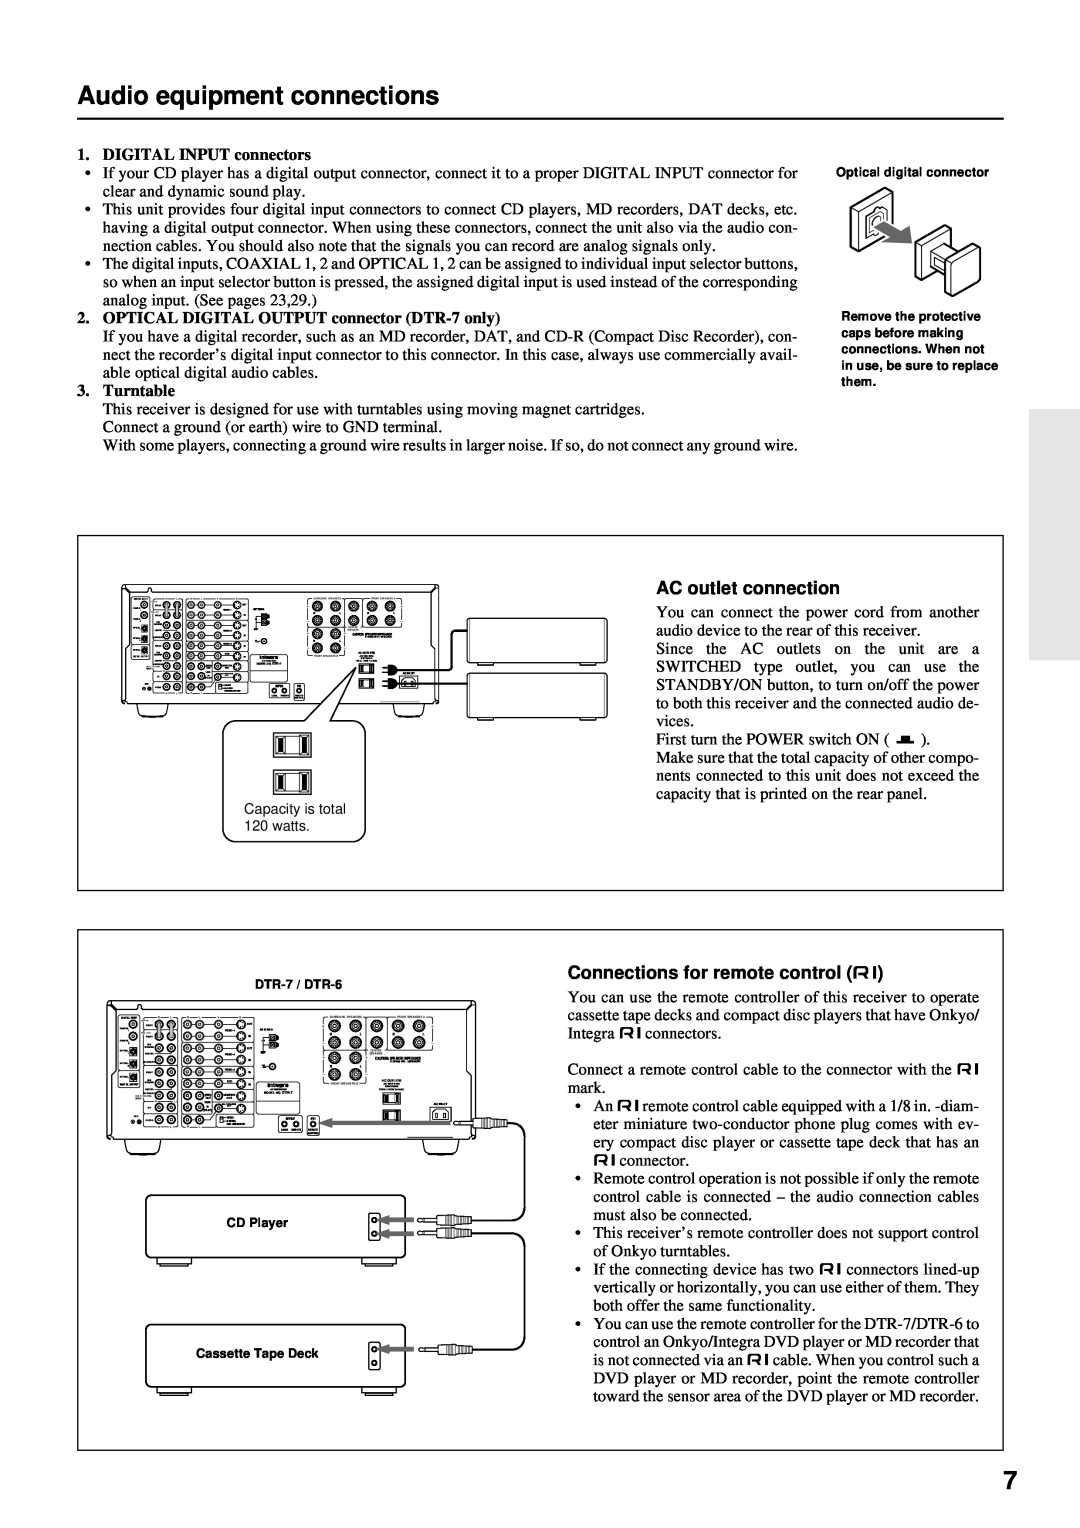 Integra DTR-7 instruction manual Audio equipment connections, AC outlet connection, Connections for remote control z 